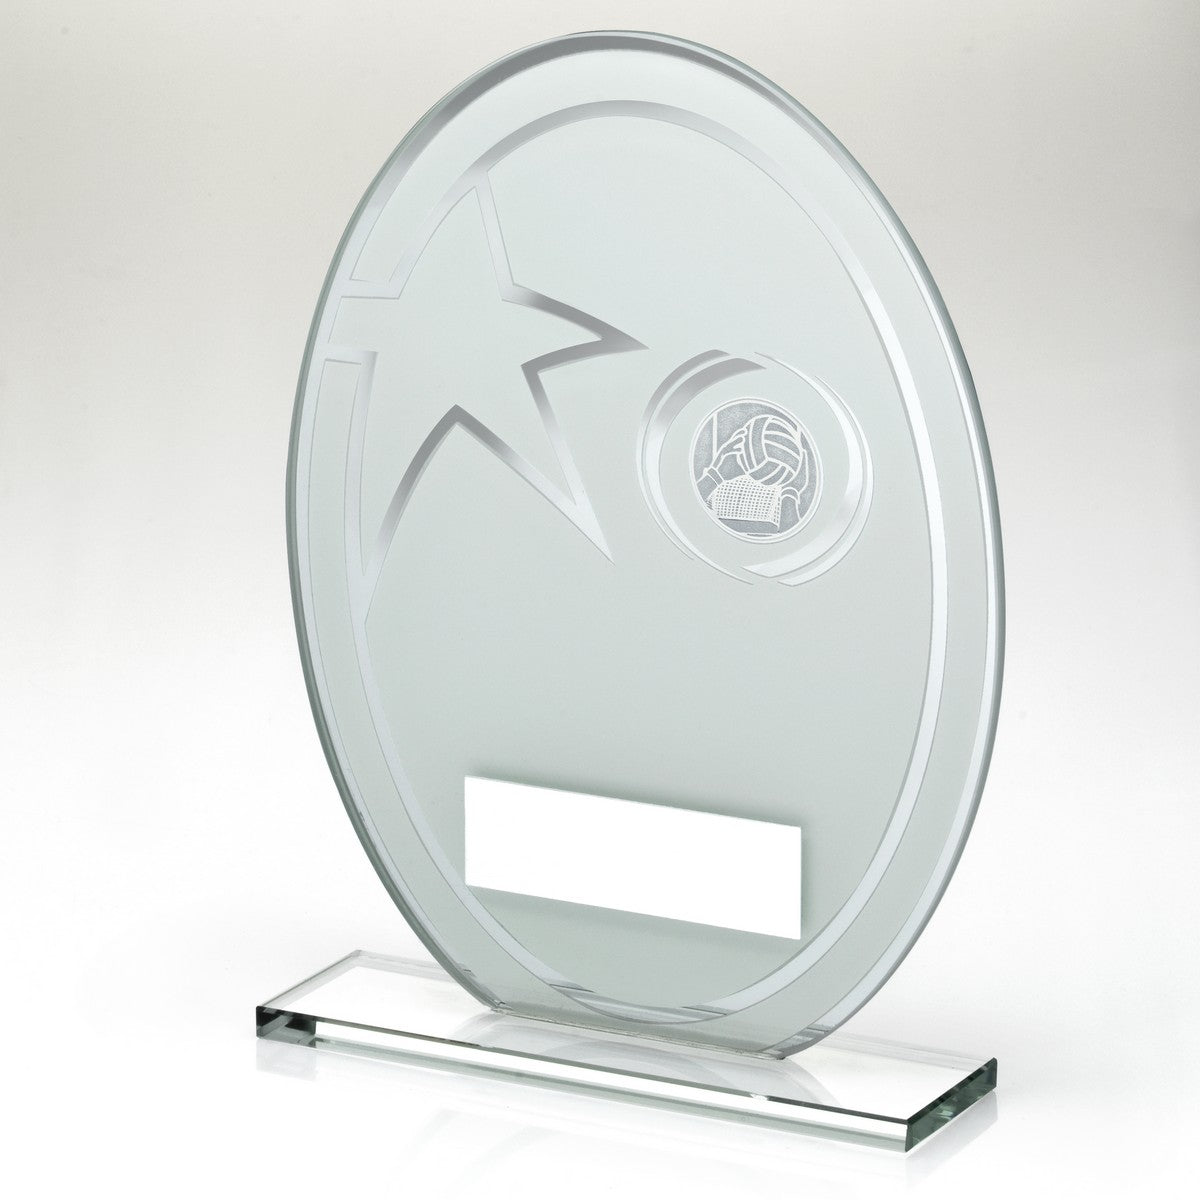 Gaelic Football Glass Oval Trophy